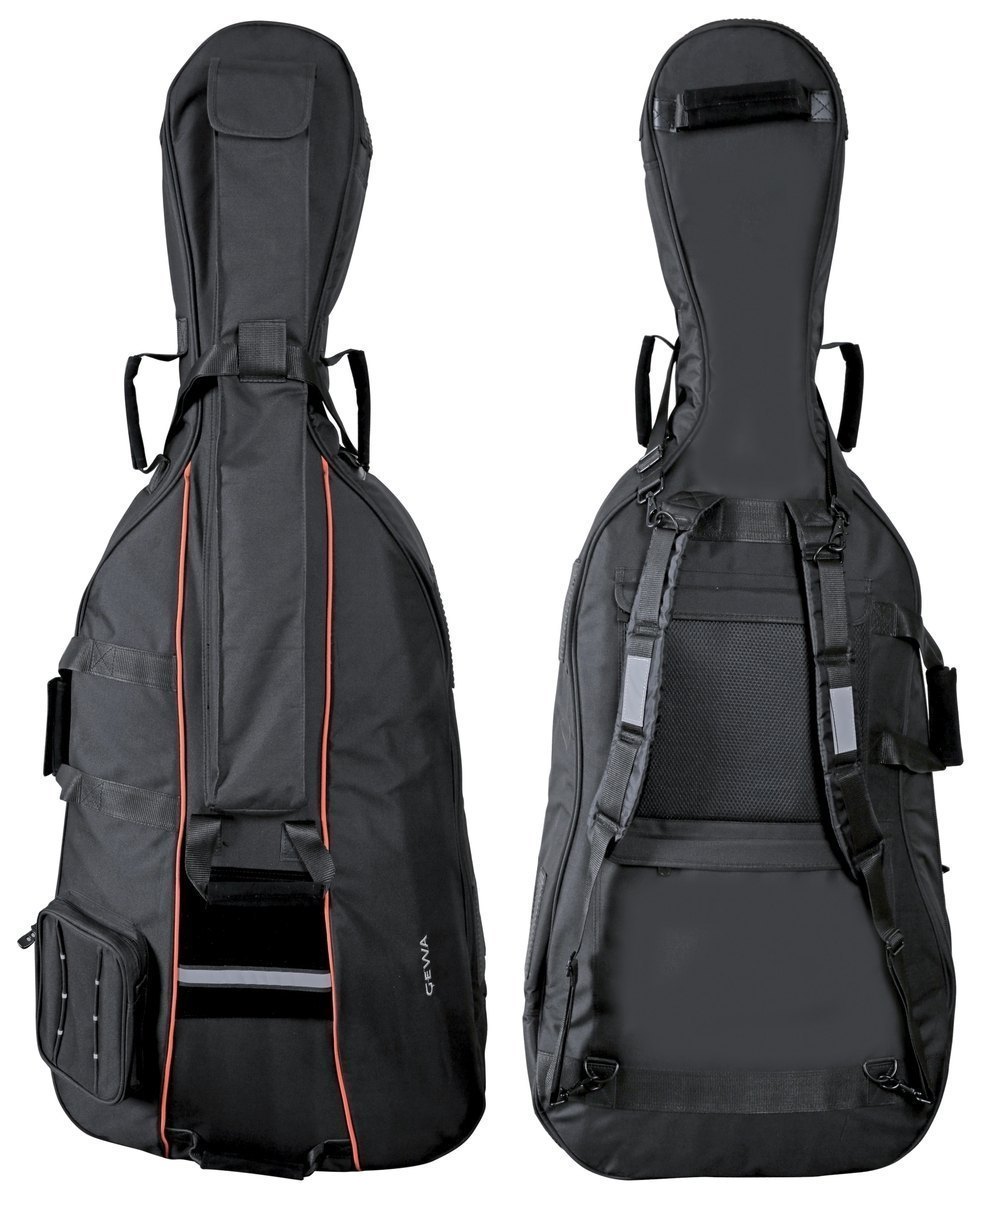 GEWA Cello Gig-Bag, Premium, 10mm Padding, 3/4, Black